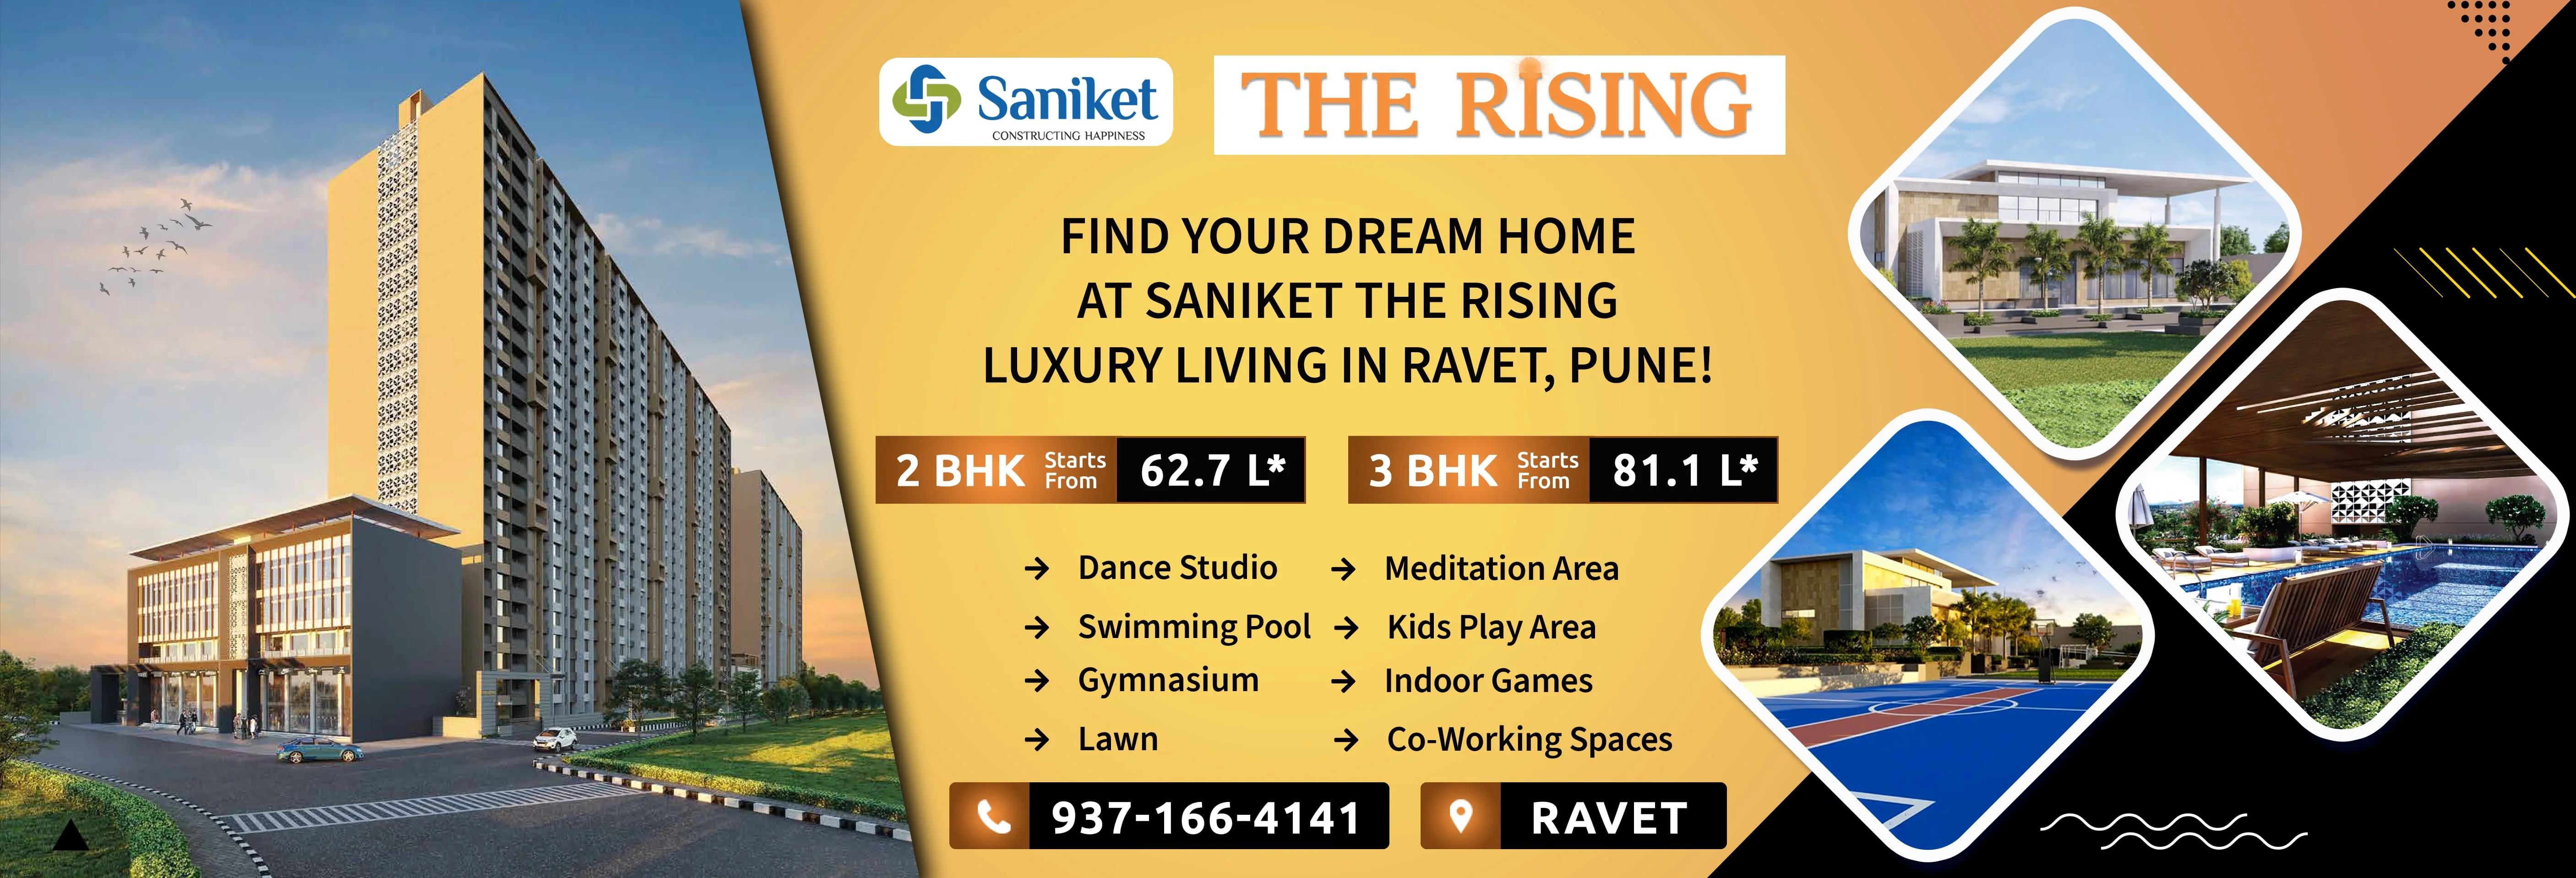 Saniket The Rising slide1